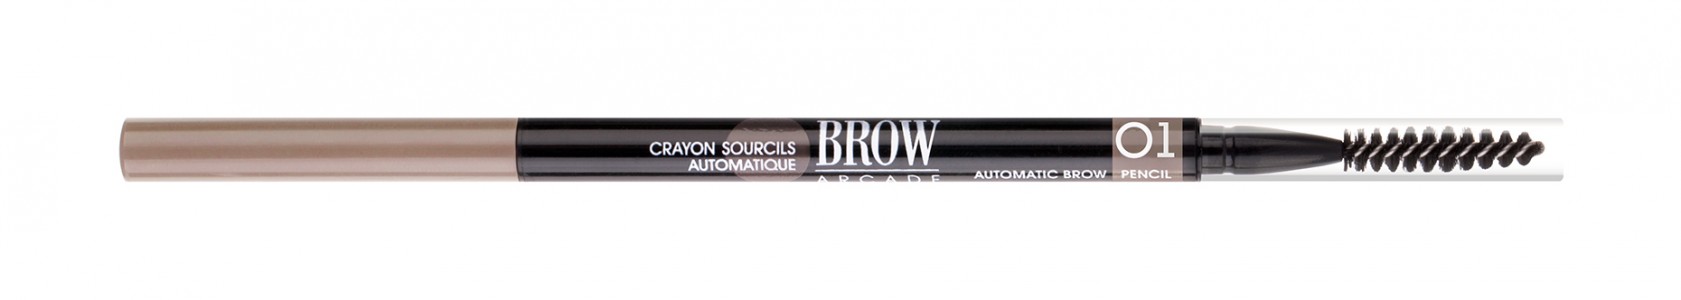 Карандаш для бровей Vivienne Sabo Brow Arcade Automatic Eyebrow Pencil 01 (Цвет 01 Светло-коричневый variant_hex_name A17E6E) (6680)